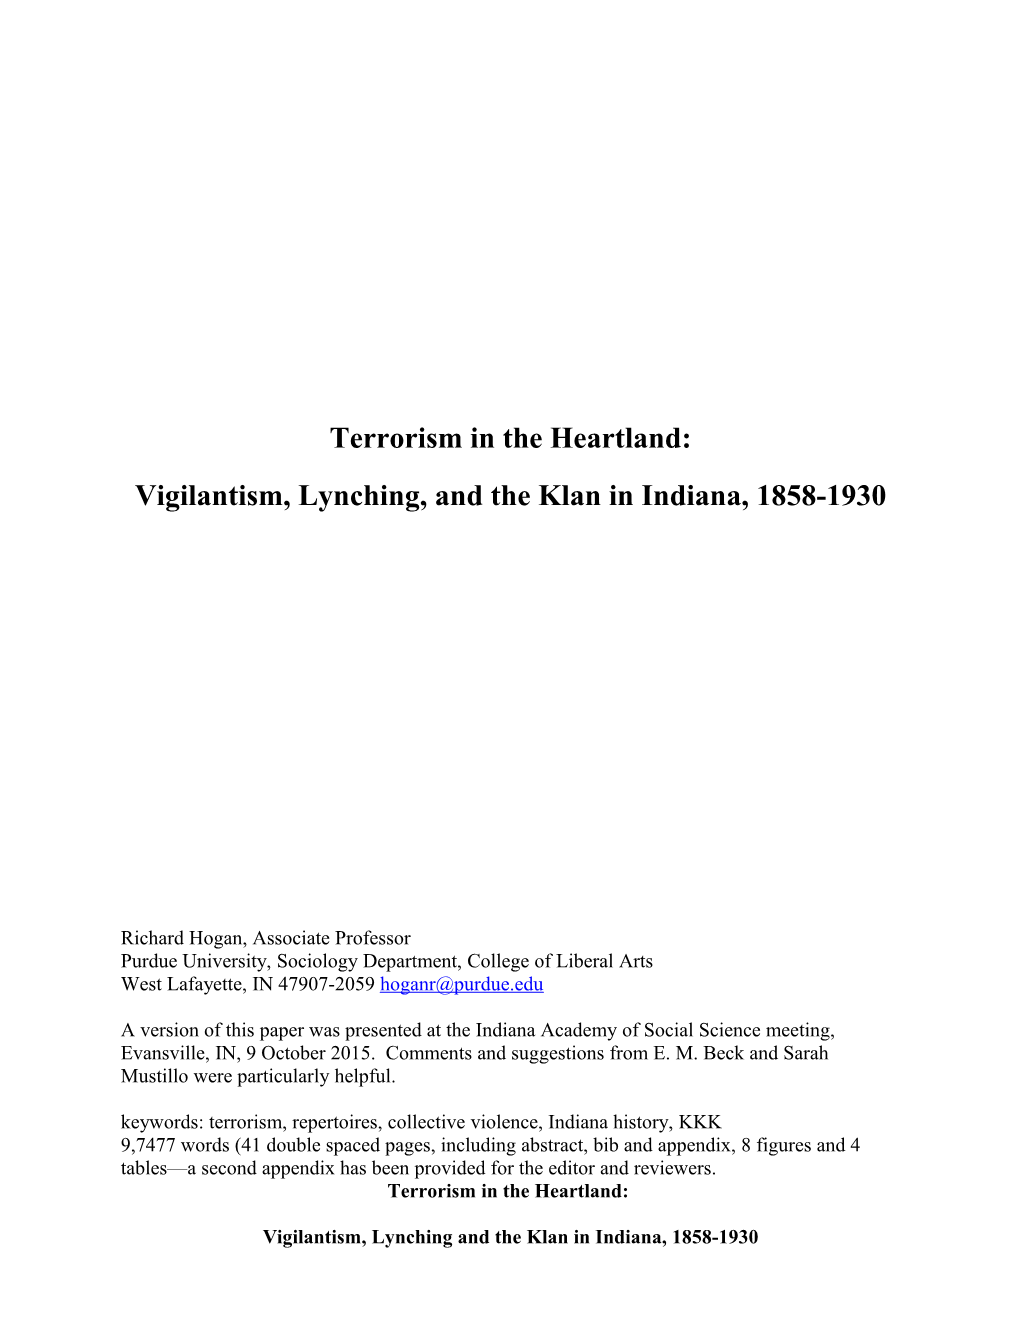 Vigilantism, Lynching, and the Klan in Indiana, 1858-1930